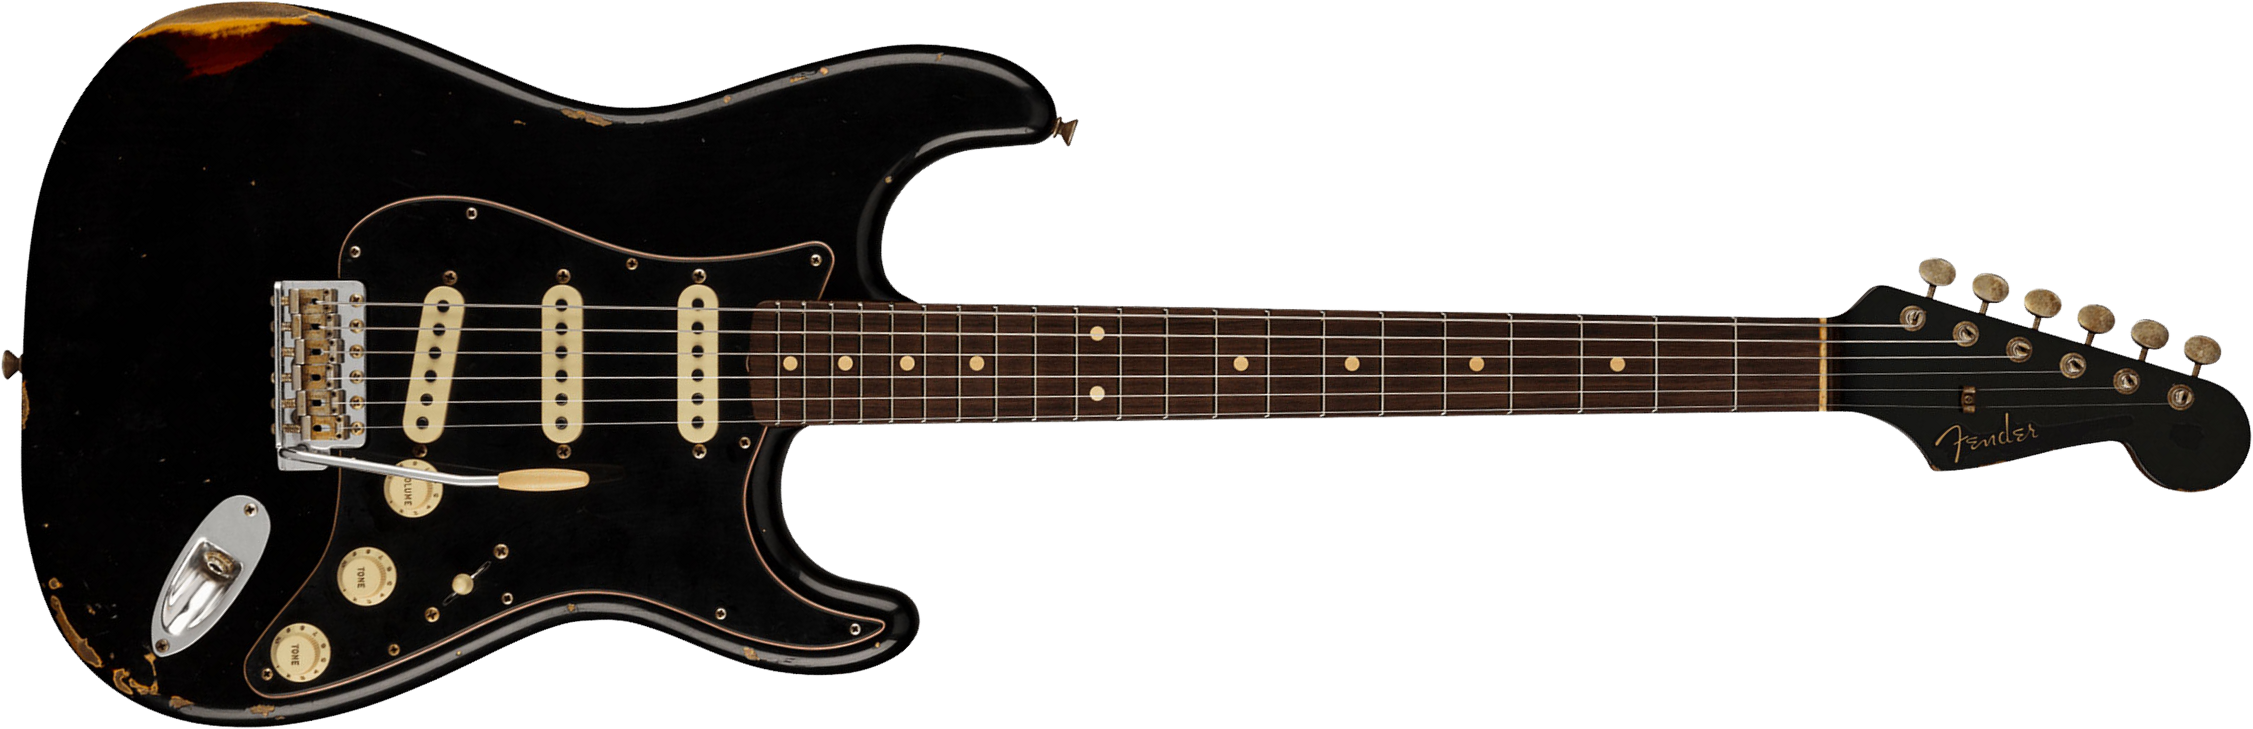 Fender Custom Shop Strat Dual Mag Ii Ltd Usa 3s Trem Rw - Relic Black Over 3-color Sunburst - Str shape electric guitar - Main picture